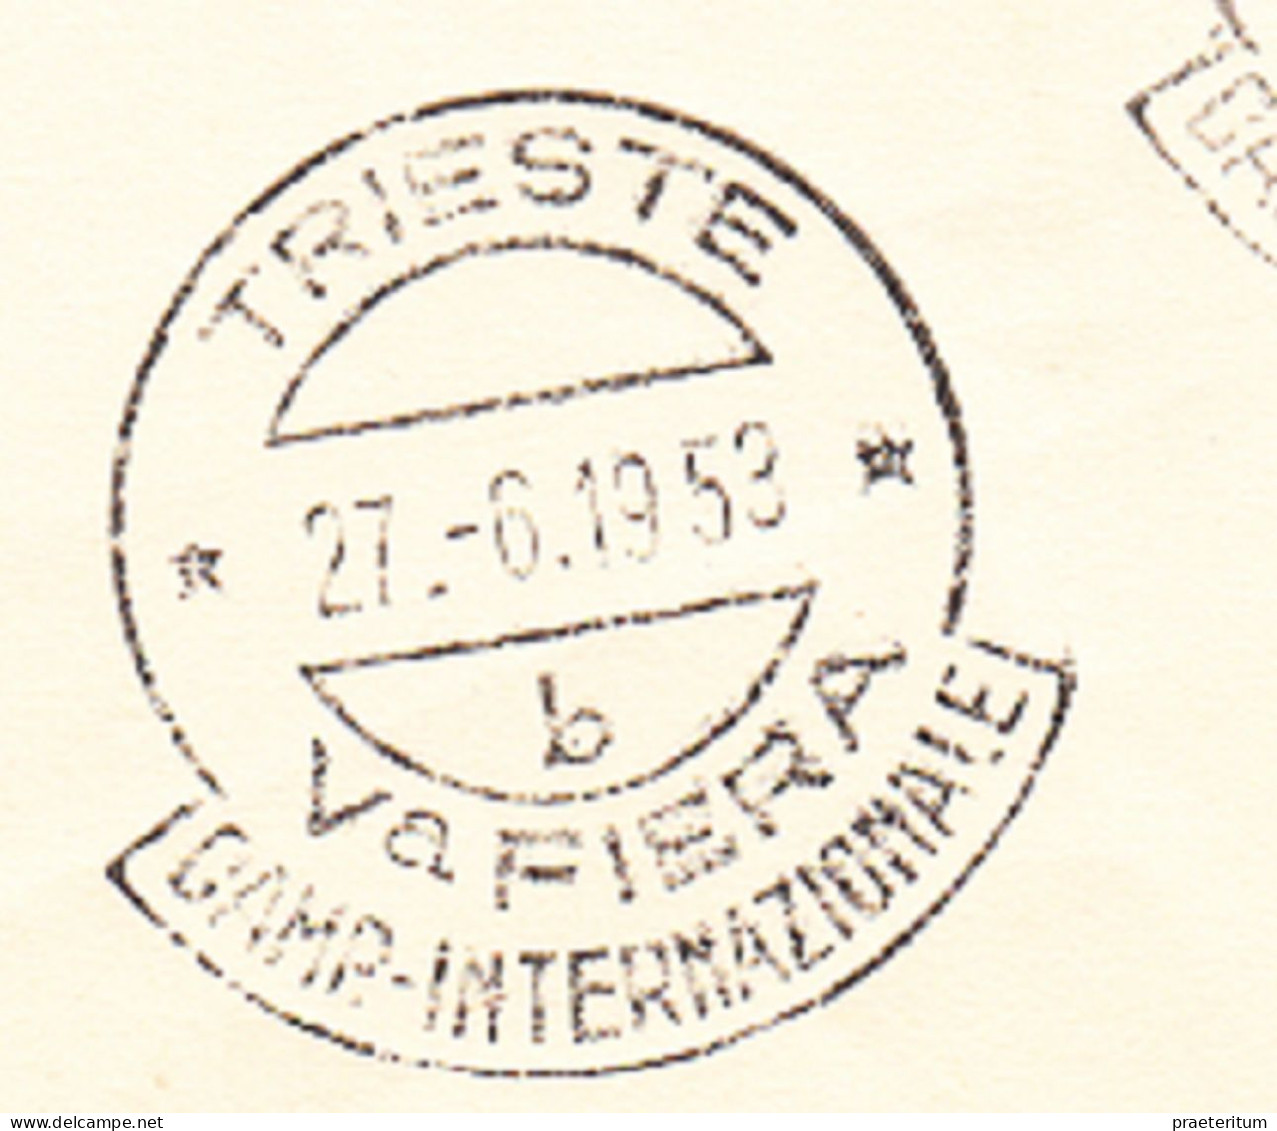 ITALIA Trieste Zone A - Fiera Di Trieste FDC, 27 VI 1953 - Marcophilia